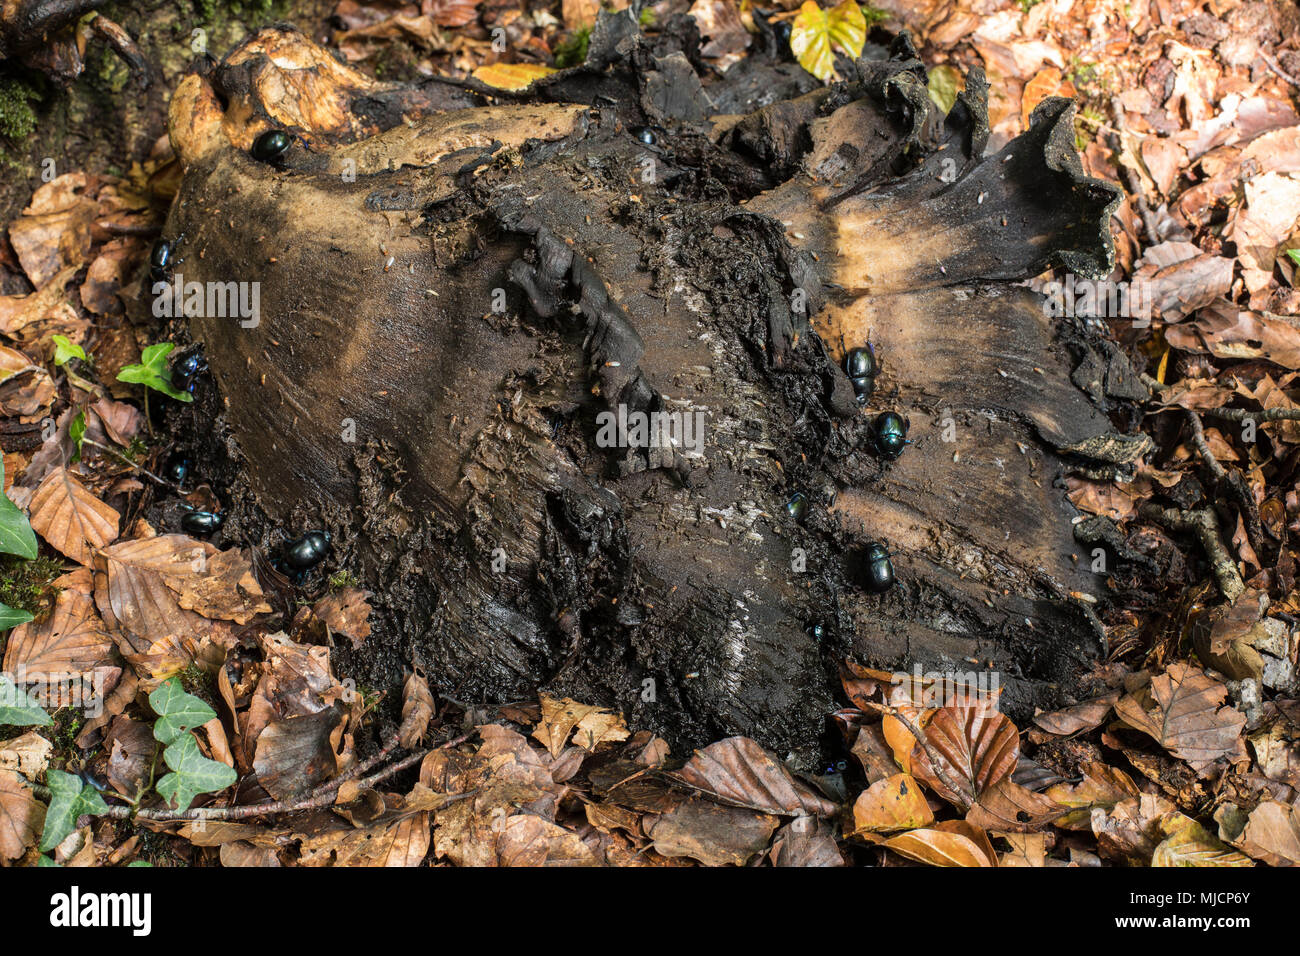 Wald Mistkäfer, Anoplotrupes stercorosus, auf toten Riesen polypore Stockfoto